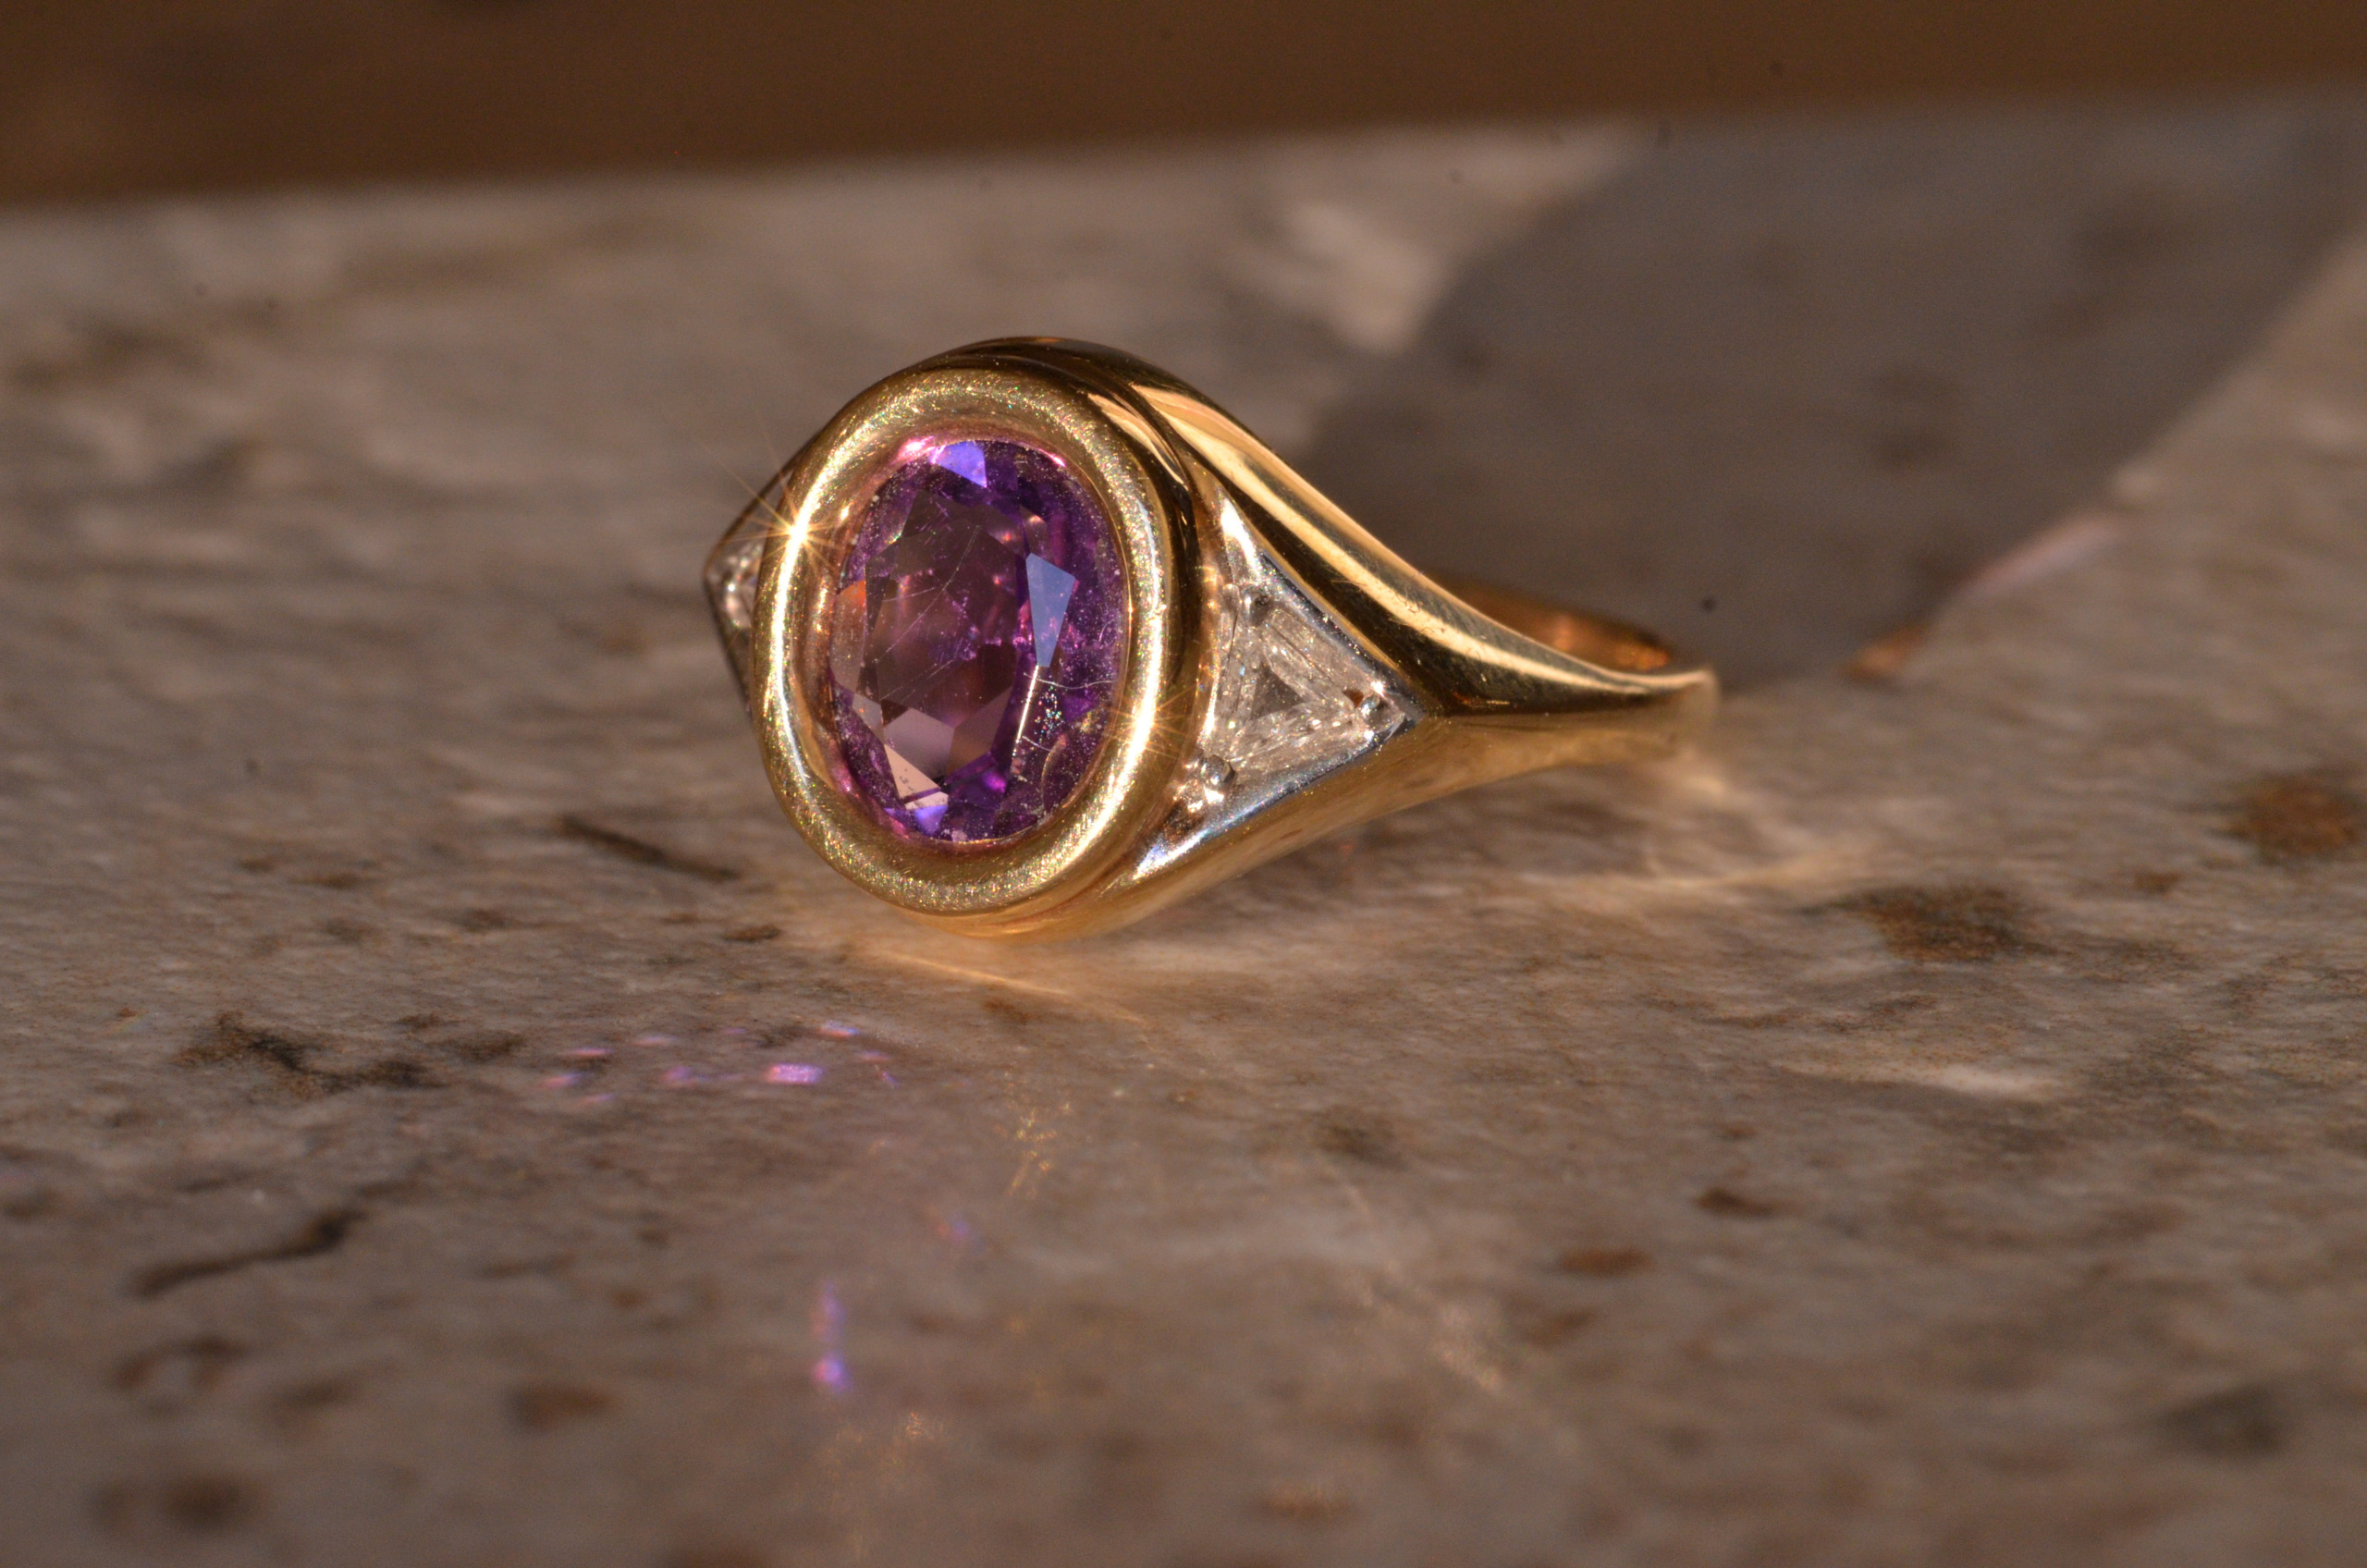 SOLD - The Merritt: Signed Mid-Century Modern Amethyst Ring